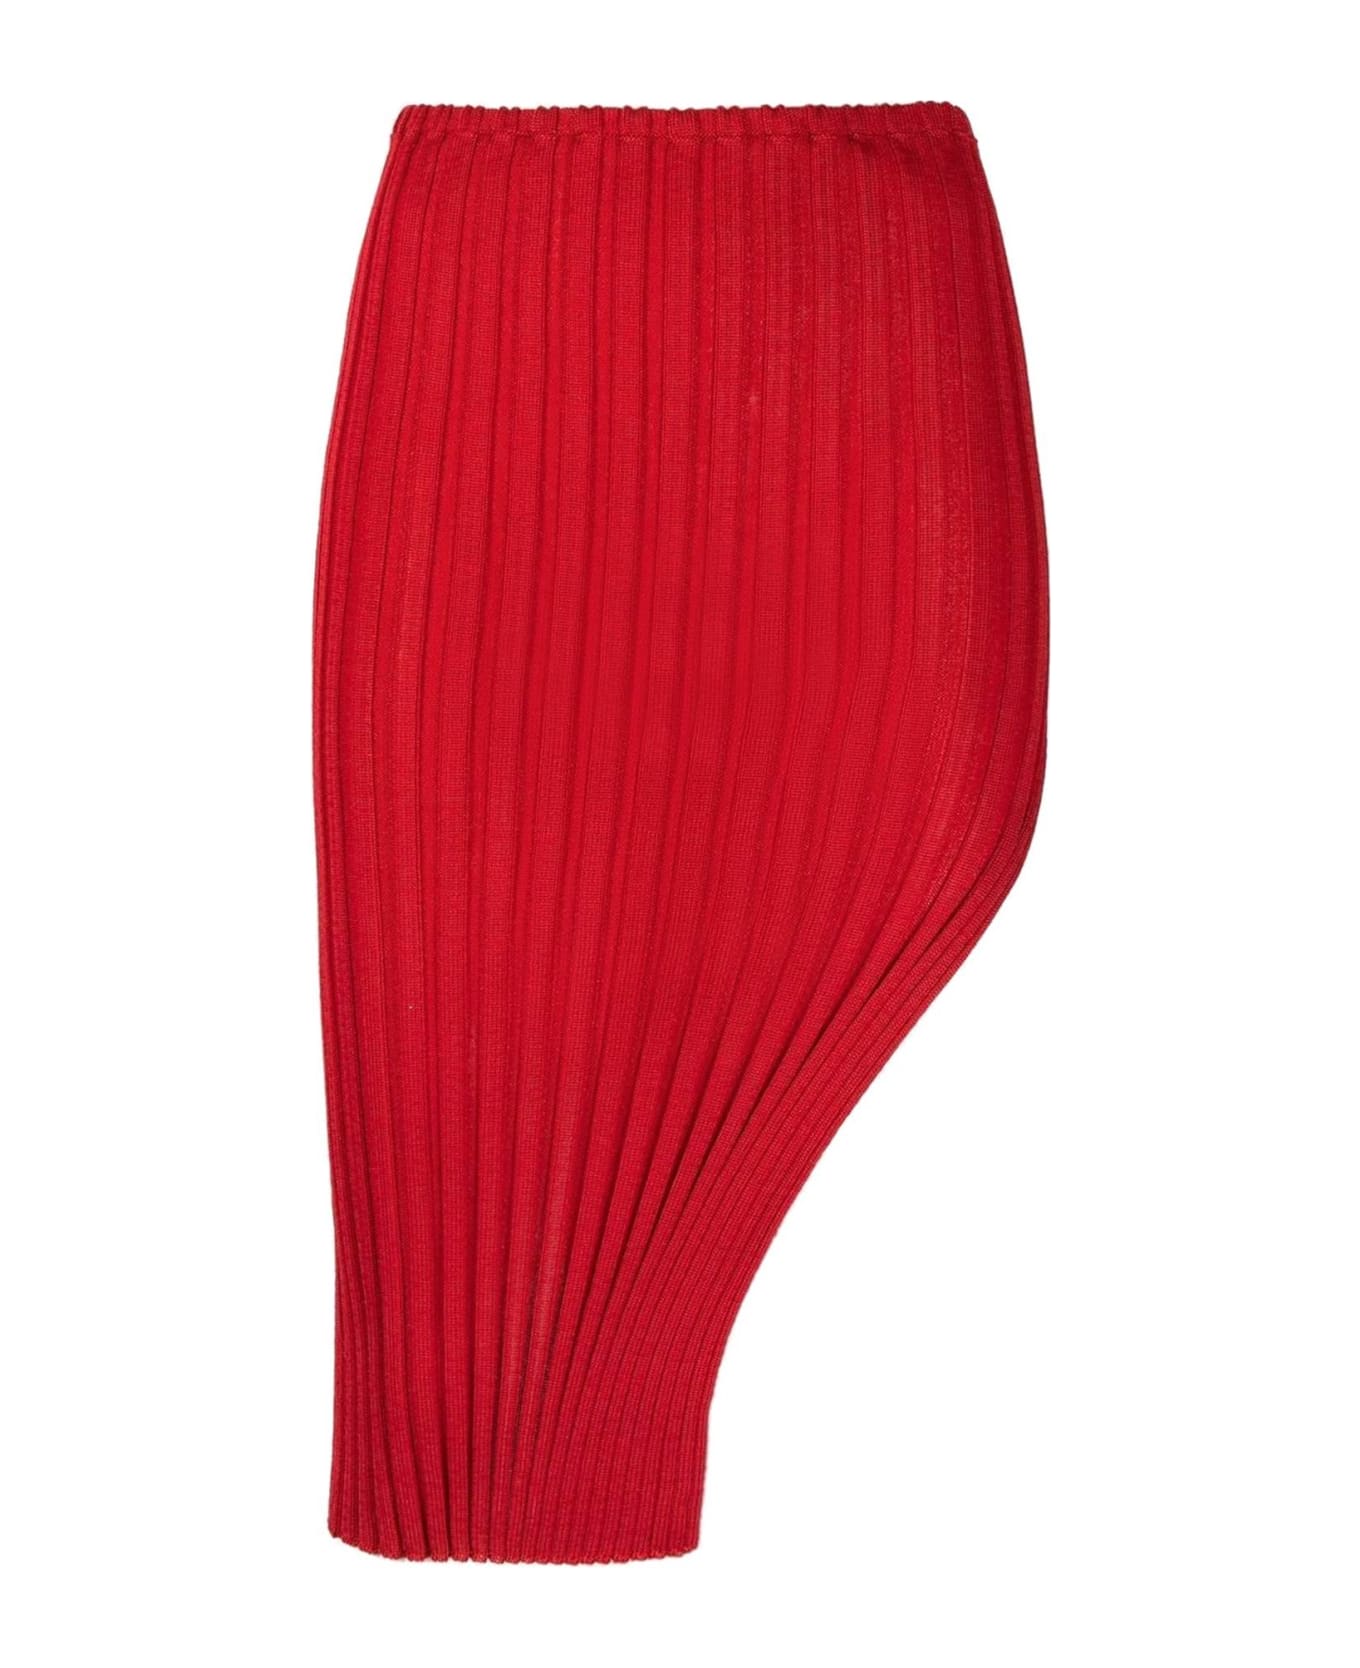 A. Roege Hove Ara Midi Skirt - CHERRY (Red)